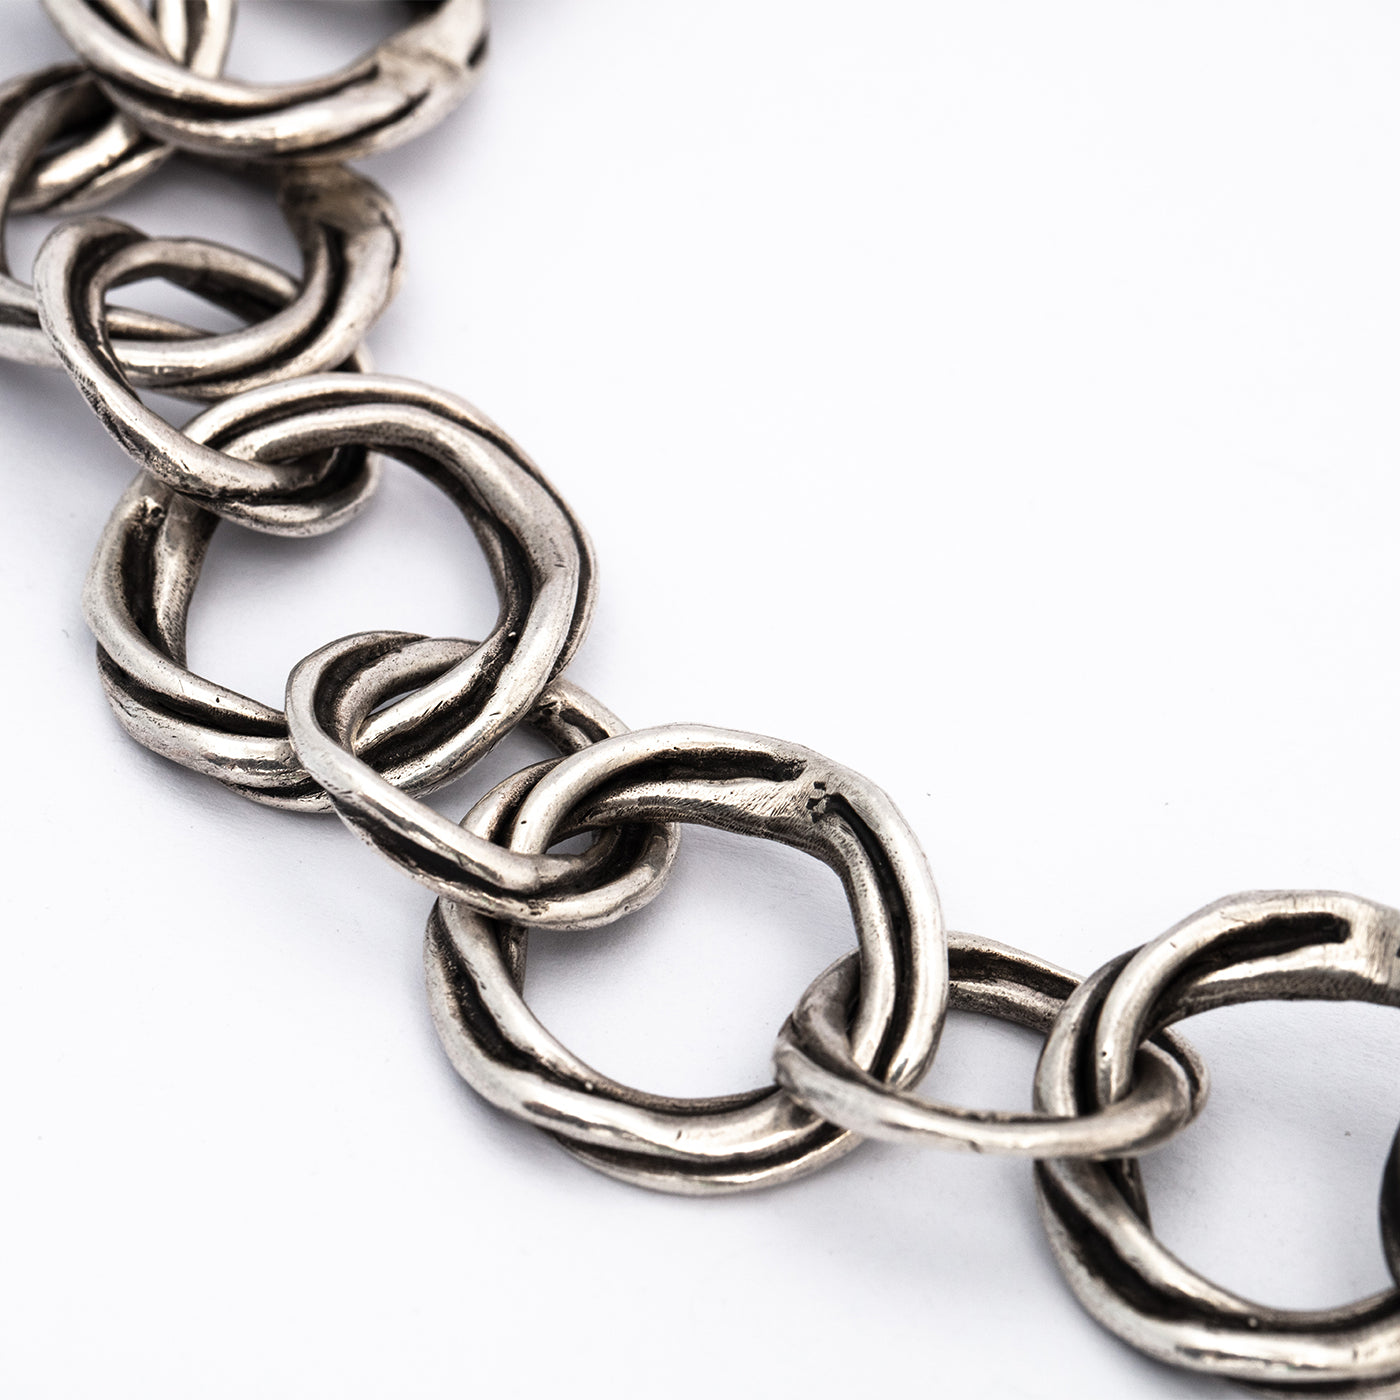 Necklace choker Flow 1 sterling silver product image innan jewellery berlin